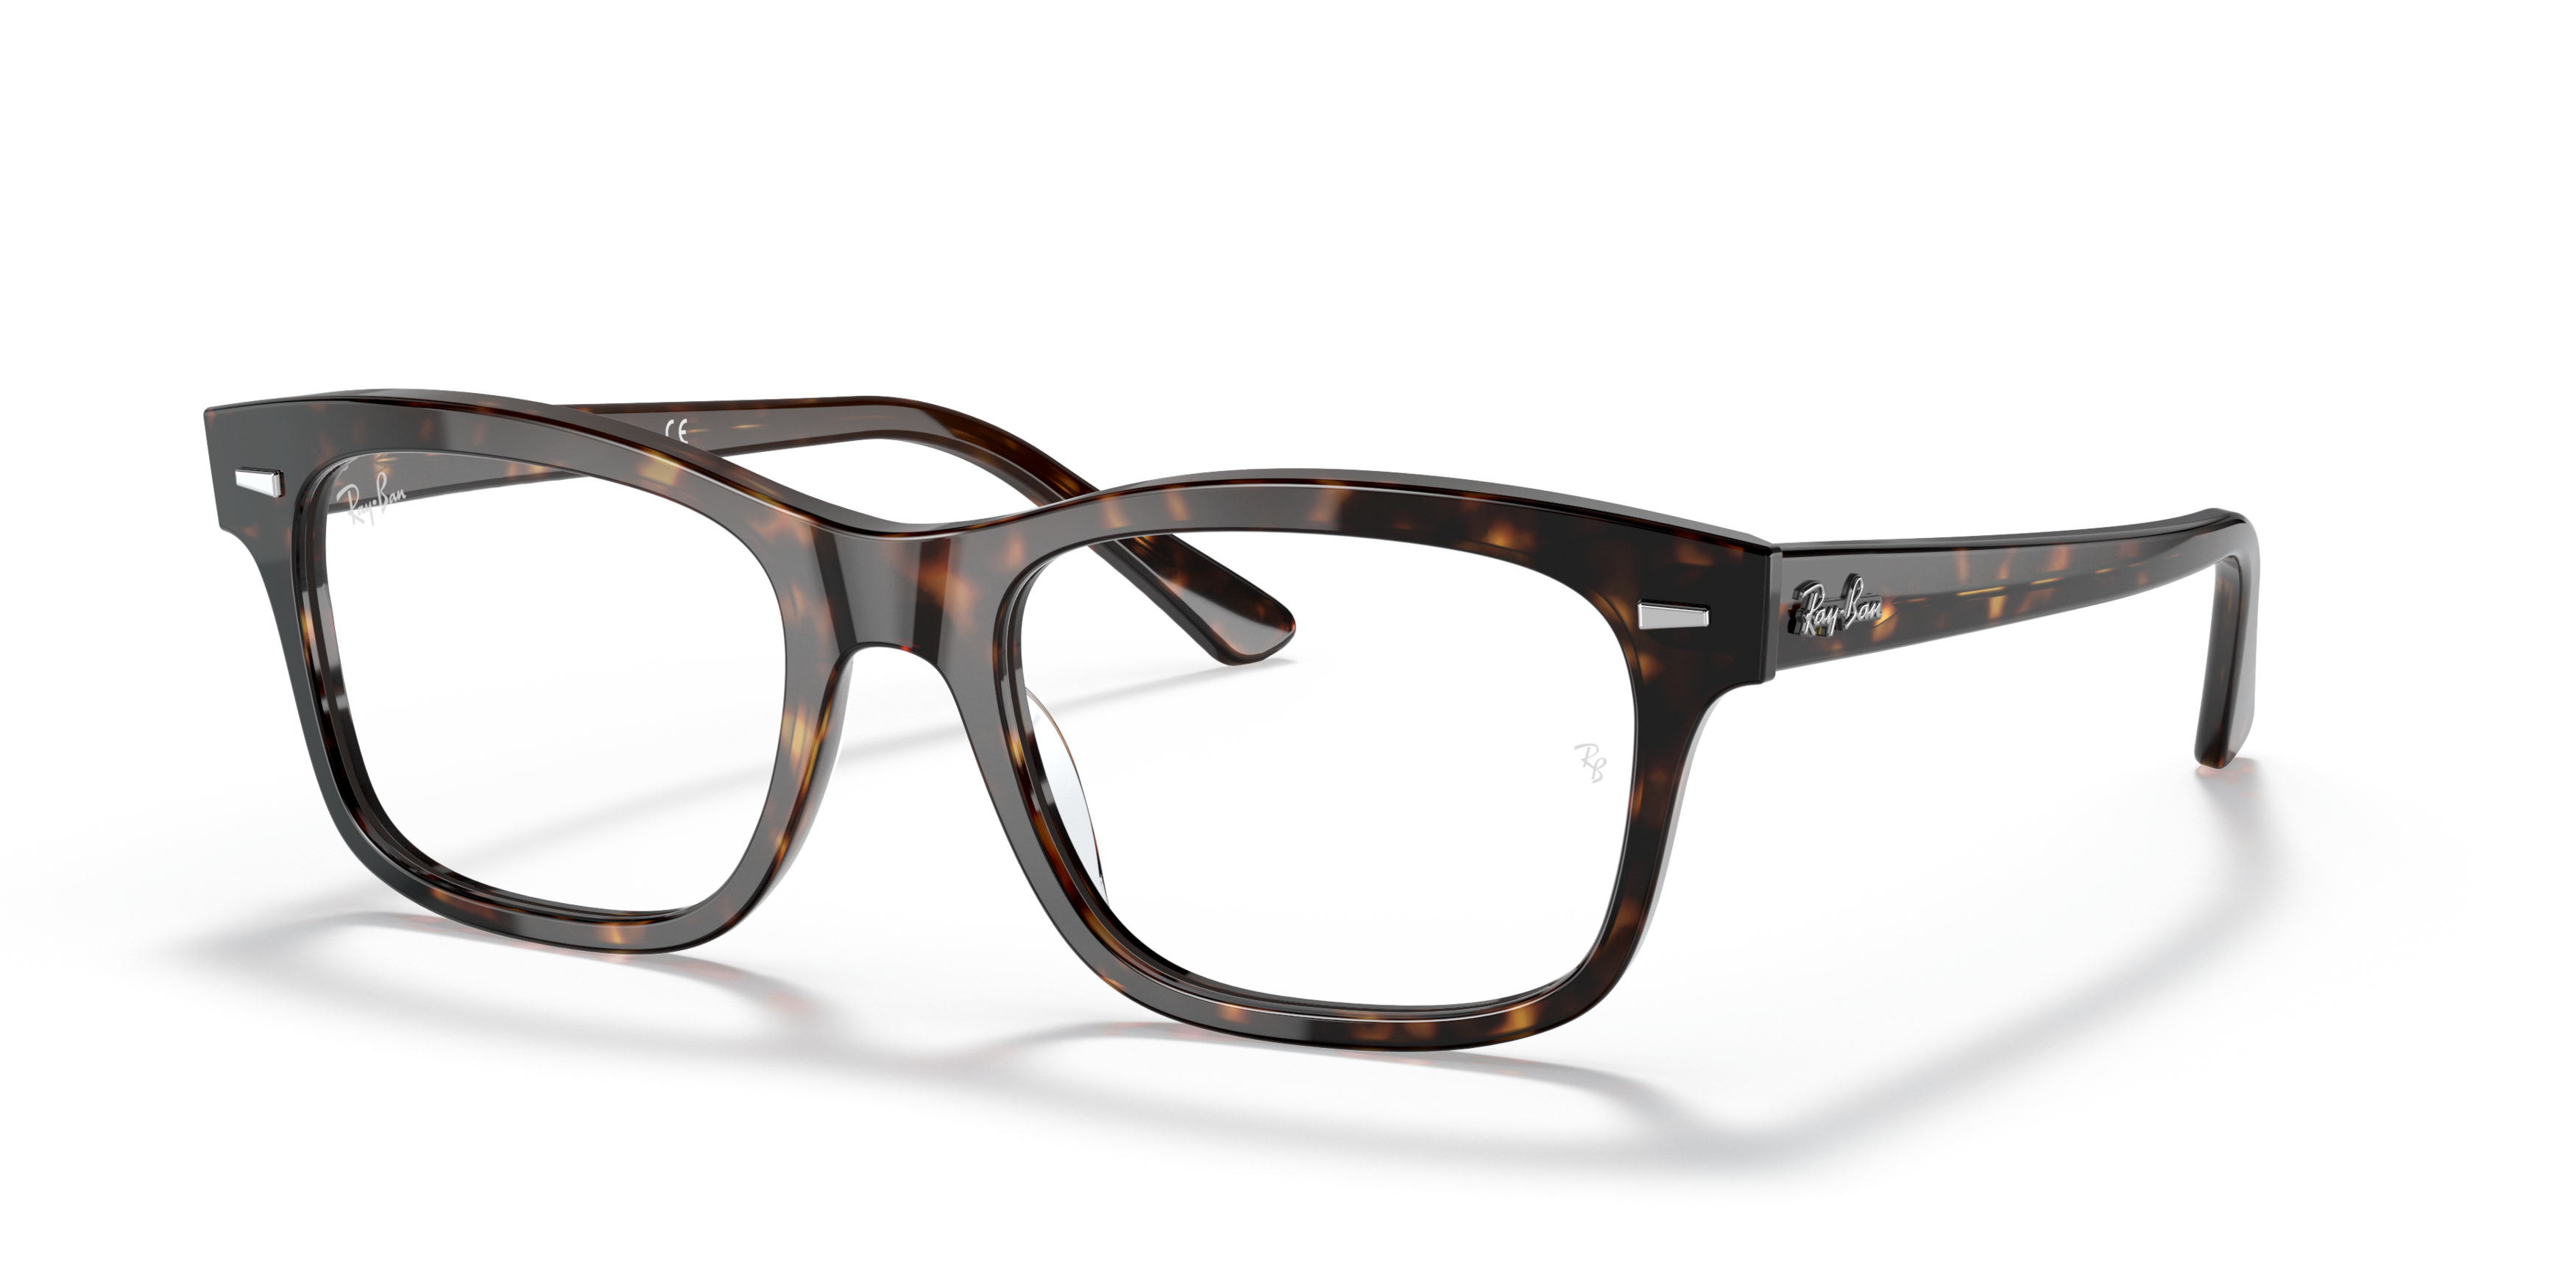 Angle_Left01 Ray-Ban Mr Burbank RX 5383 Glasses Transparent / Tortoise Shell